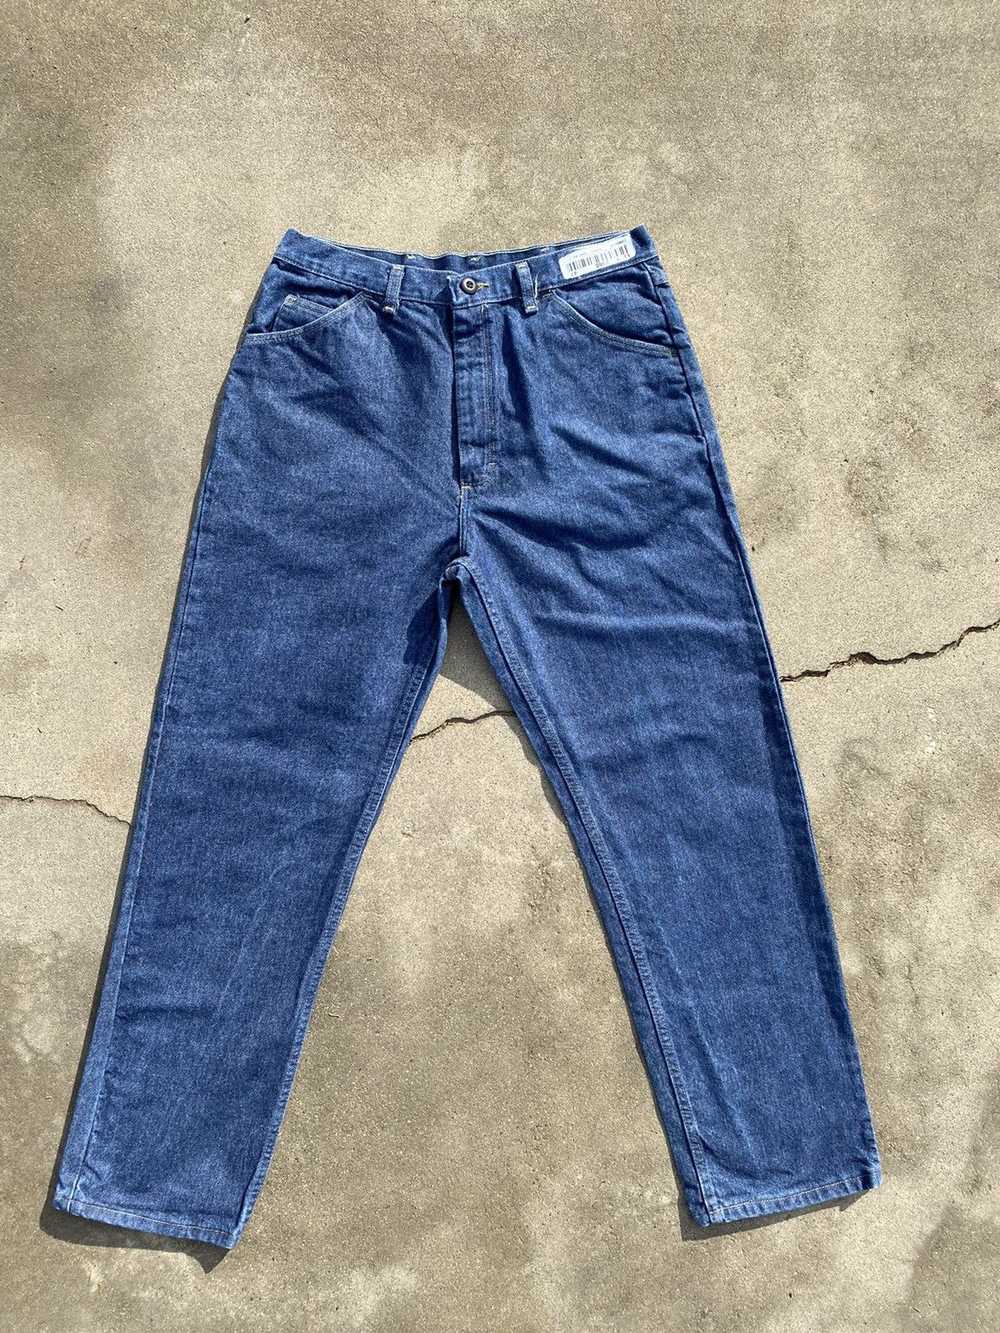 Japanese Brand × Vintage Vintage workwear jeans - image 1